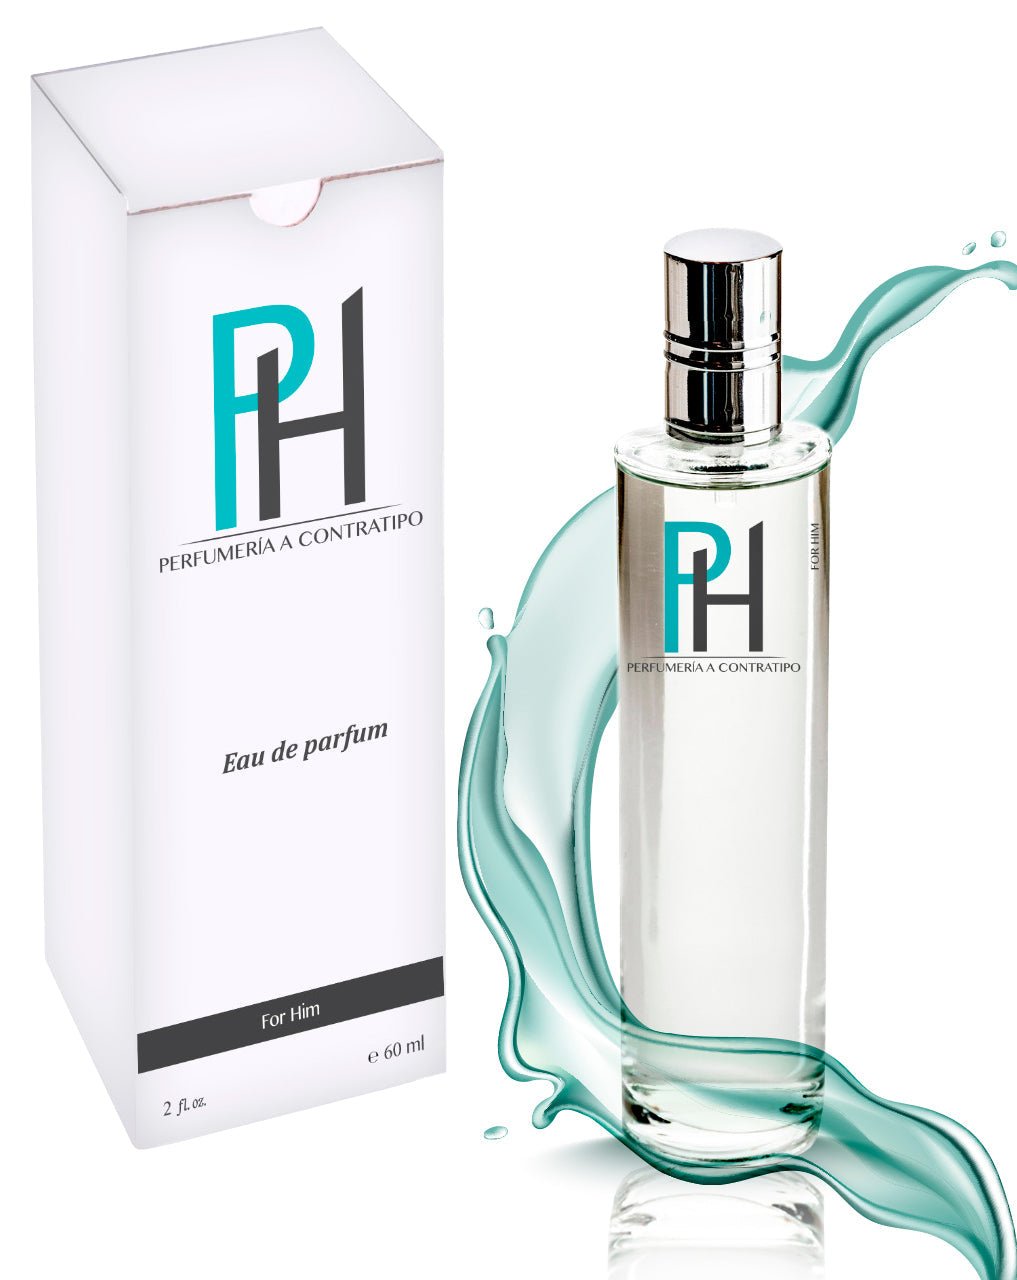 Perfume Allure Sport De 60 ml - PH Perfumería a Contratipo